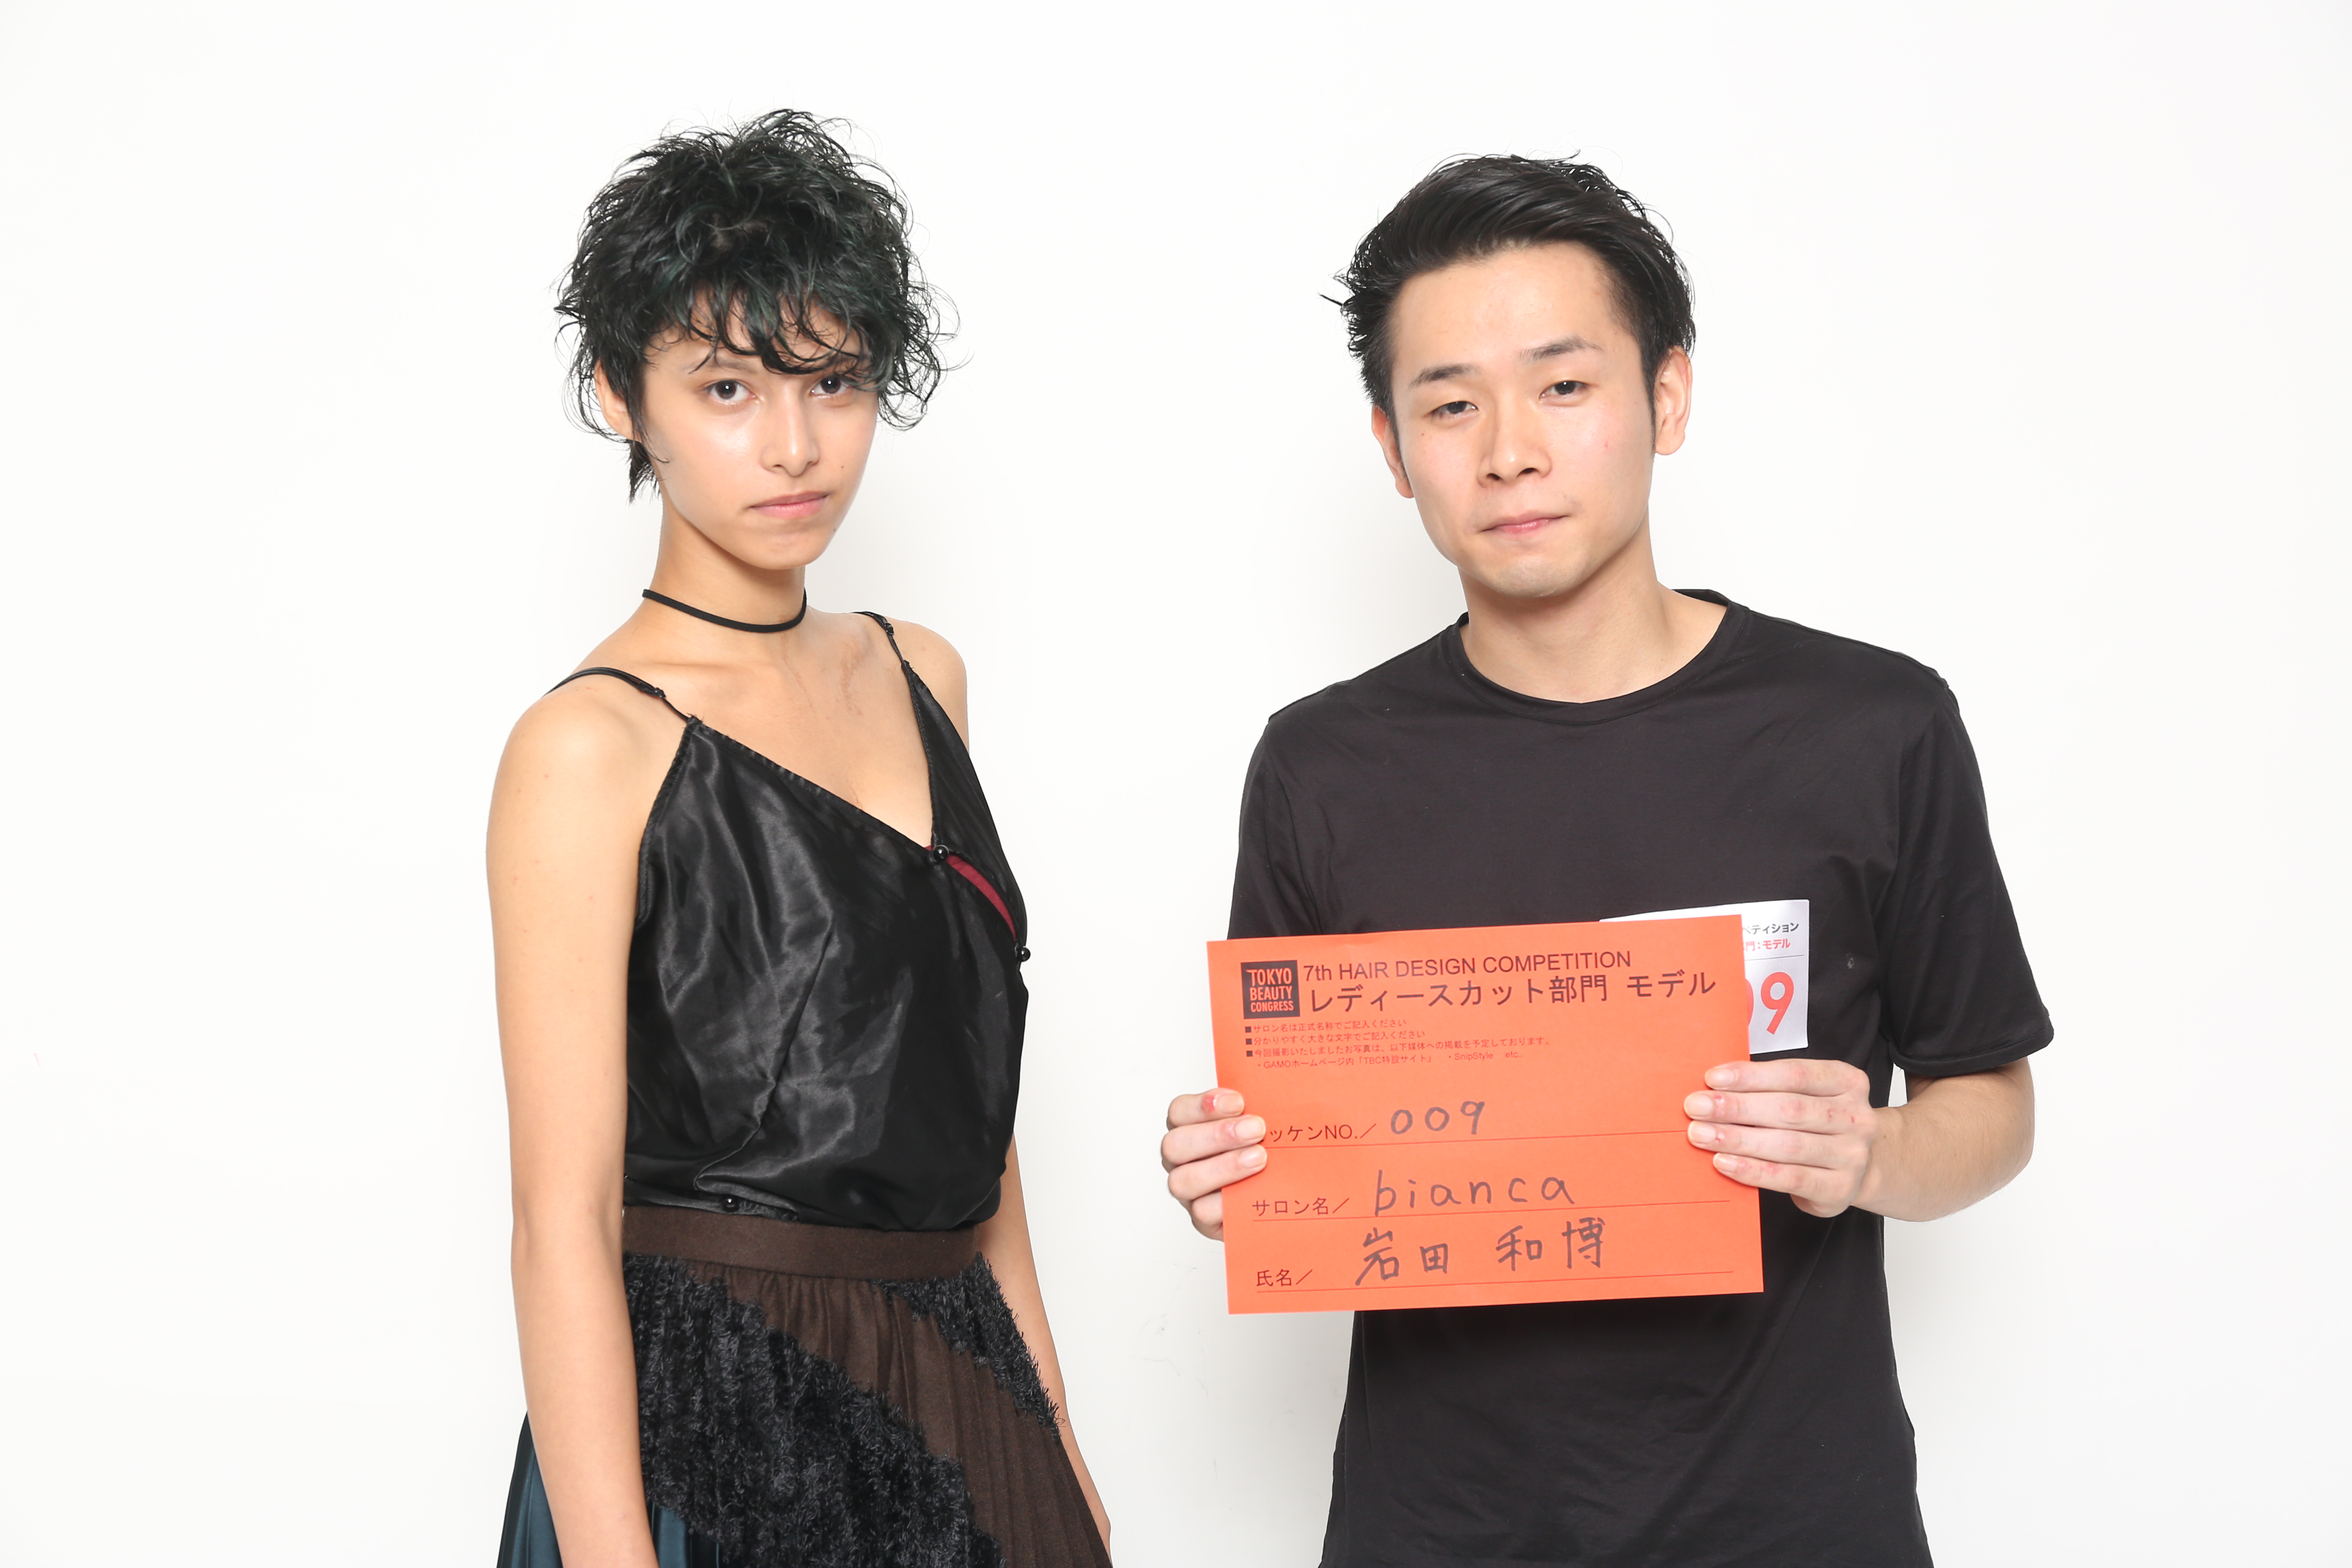 Tokyo Beauty Congress 美容界ニュース トピックス 美容師のためのwebマガジン Meme Mag ミームマグ